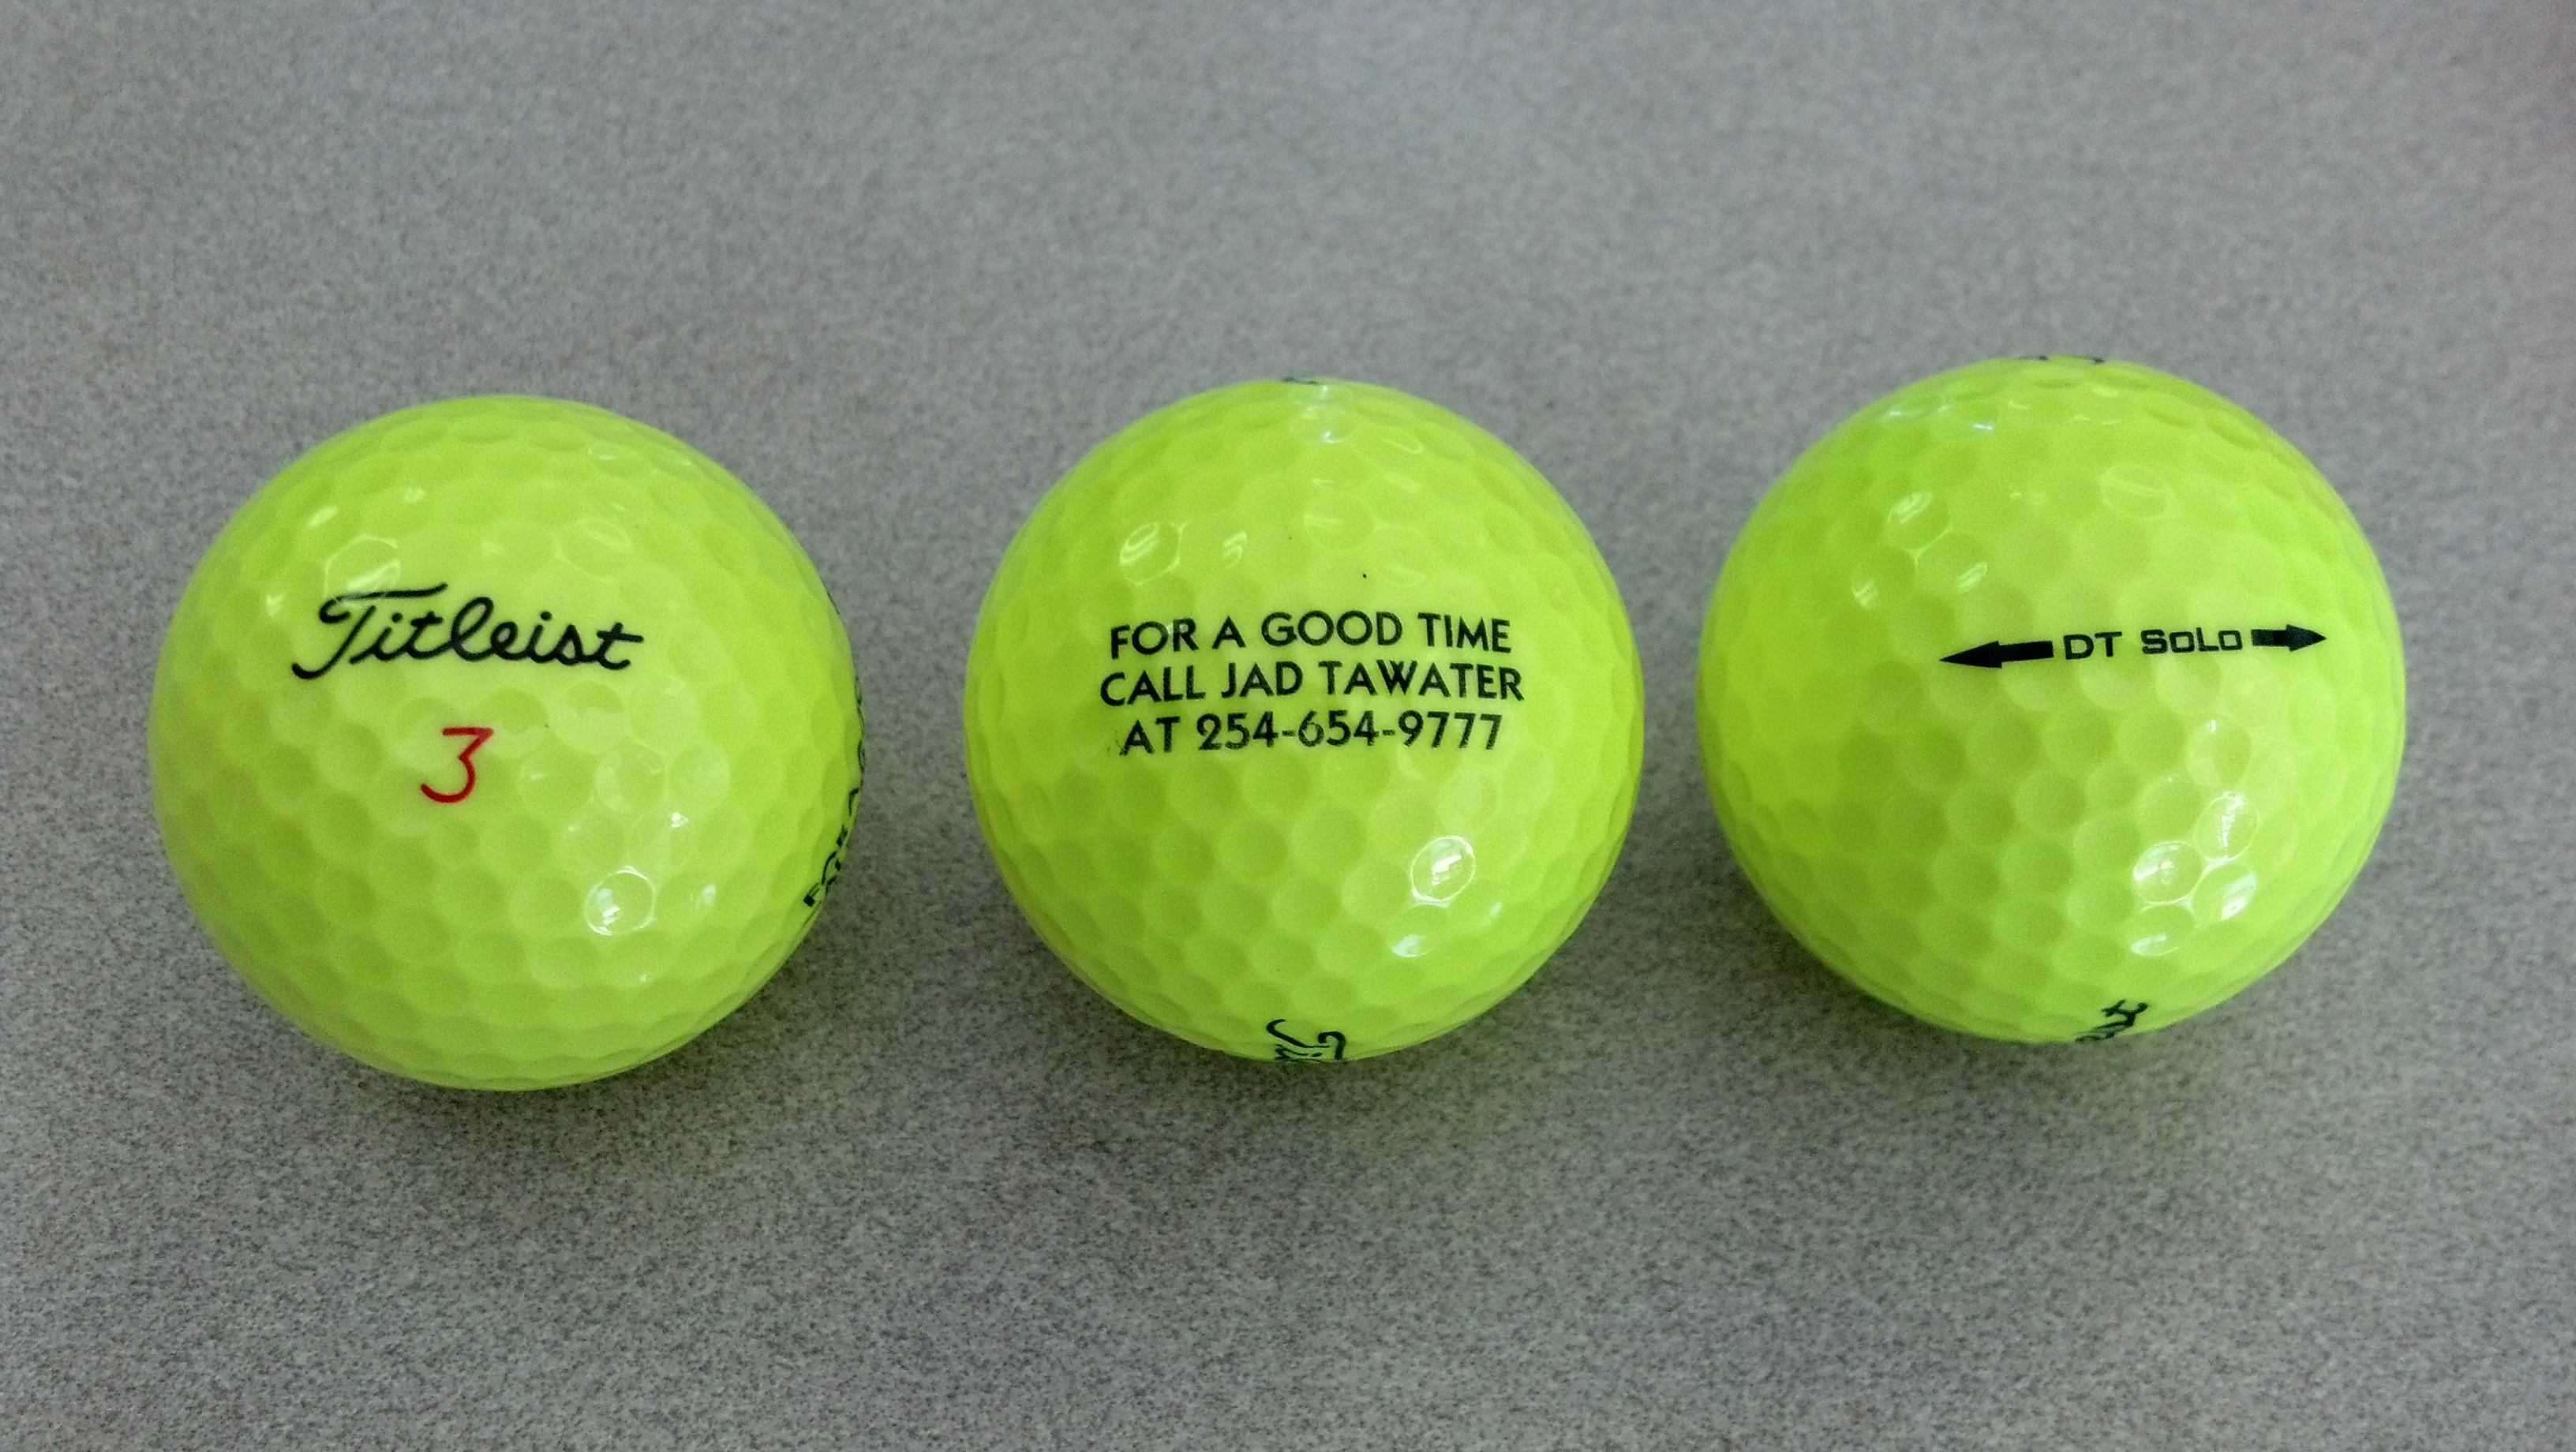 How do you mark YOUR golf ball?